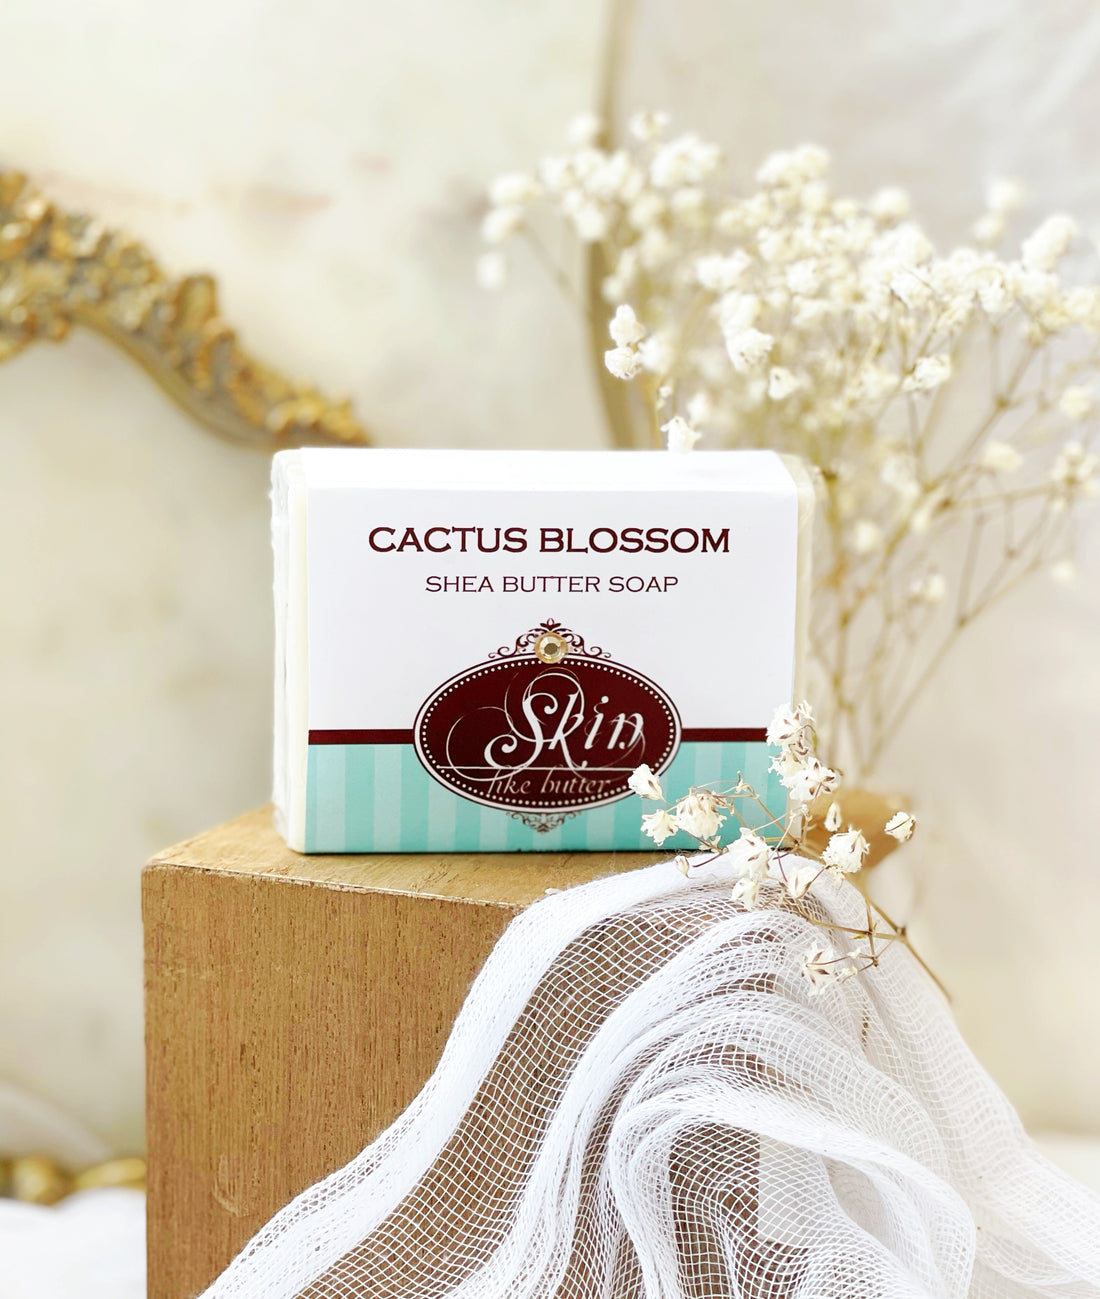 CACTUS FLOWER Skin Like Butter - Shea Butter 4 oz Soap Bar